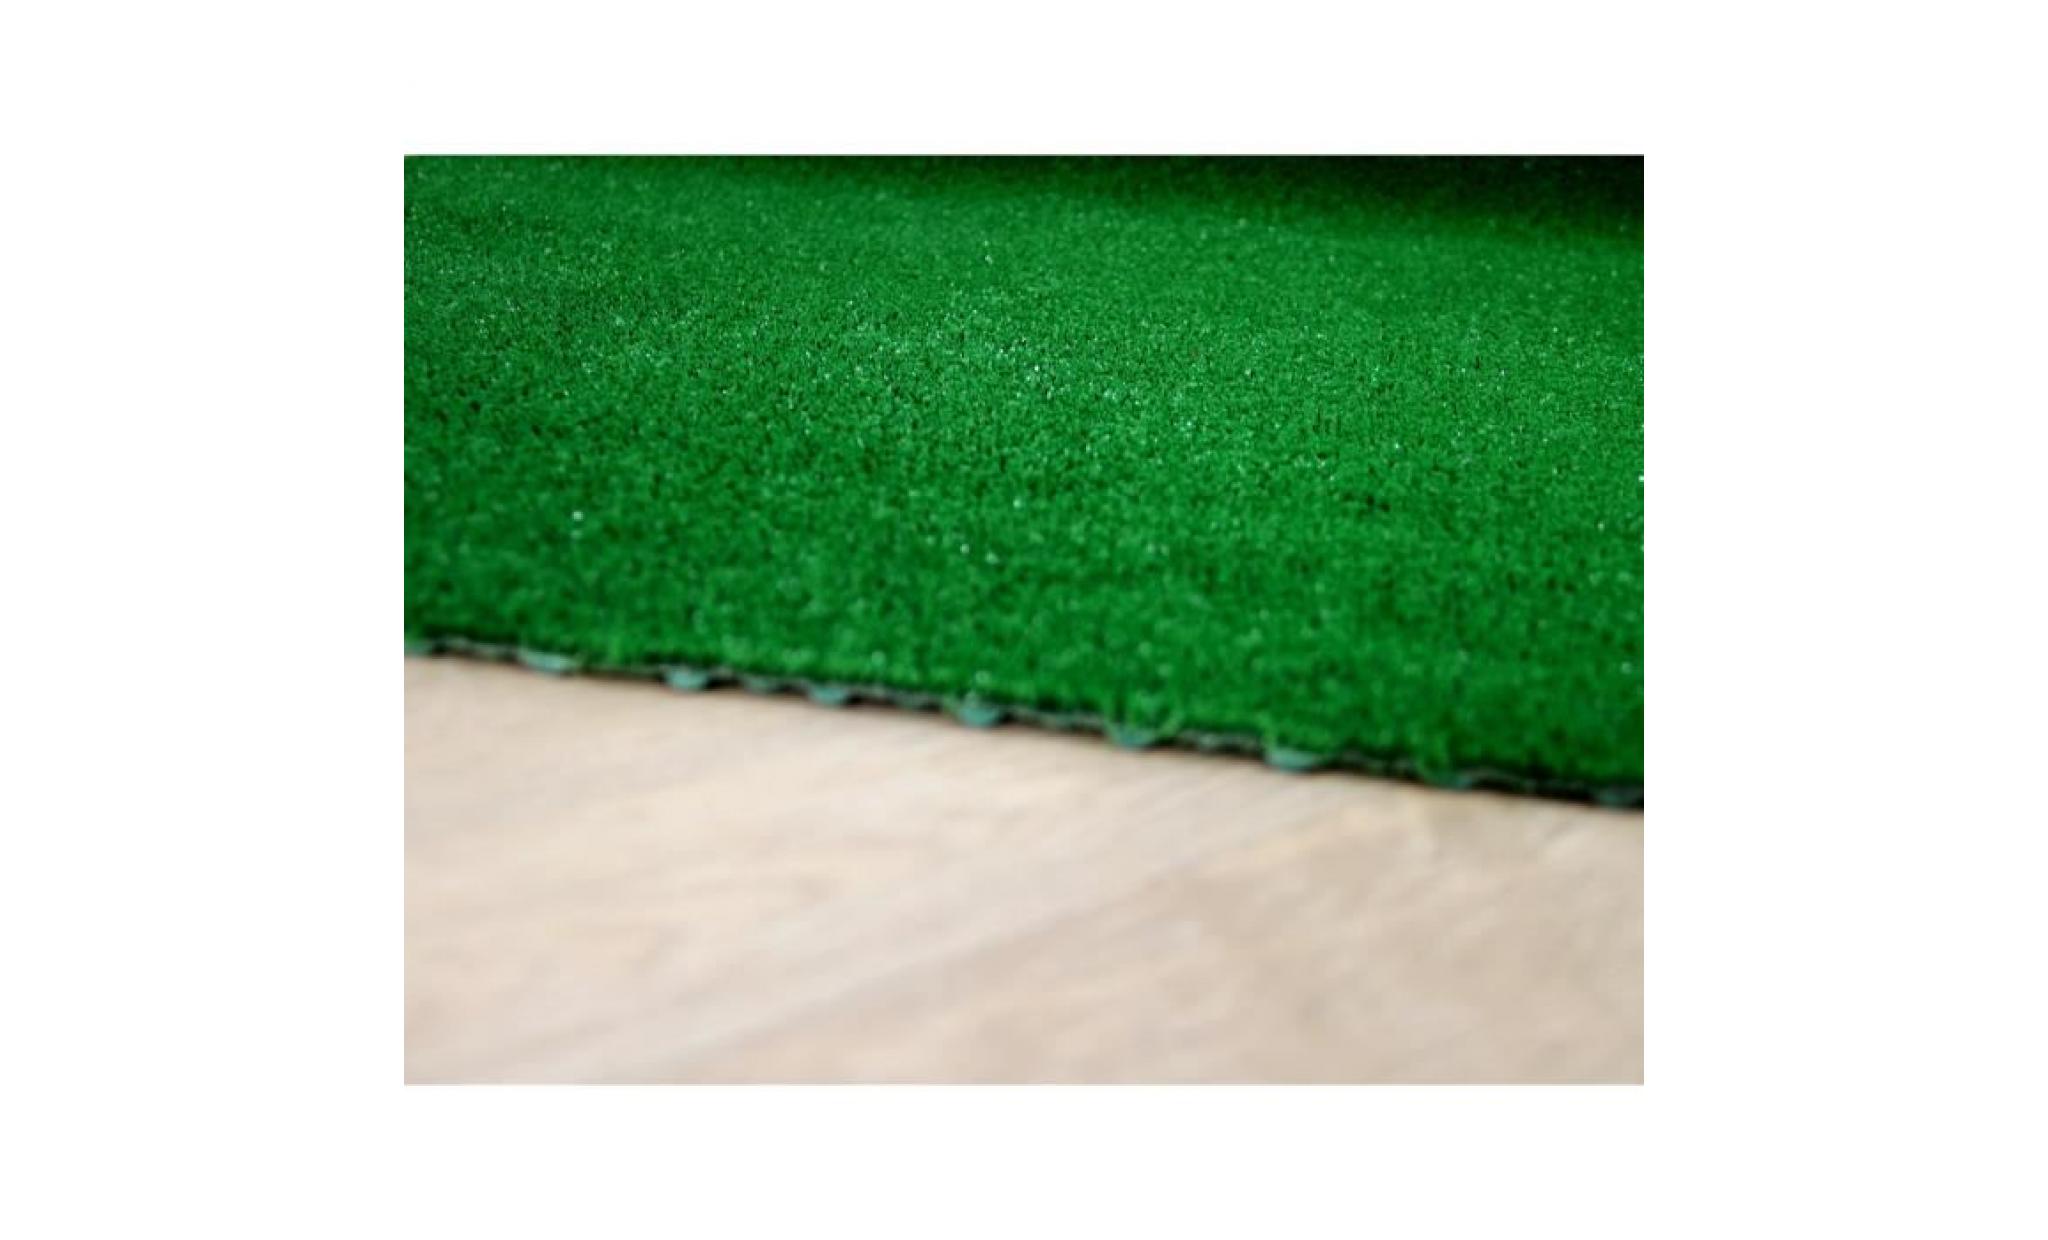 york   tapis type gazon artificiel avec nubs – pour jardin, terrasse, balcon   vert   [200x150 cm] pas cher